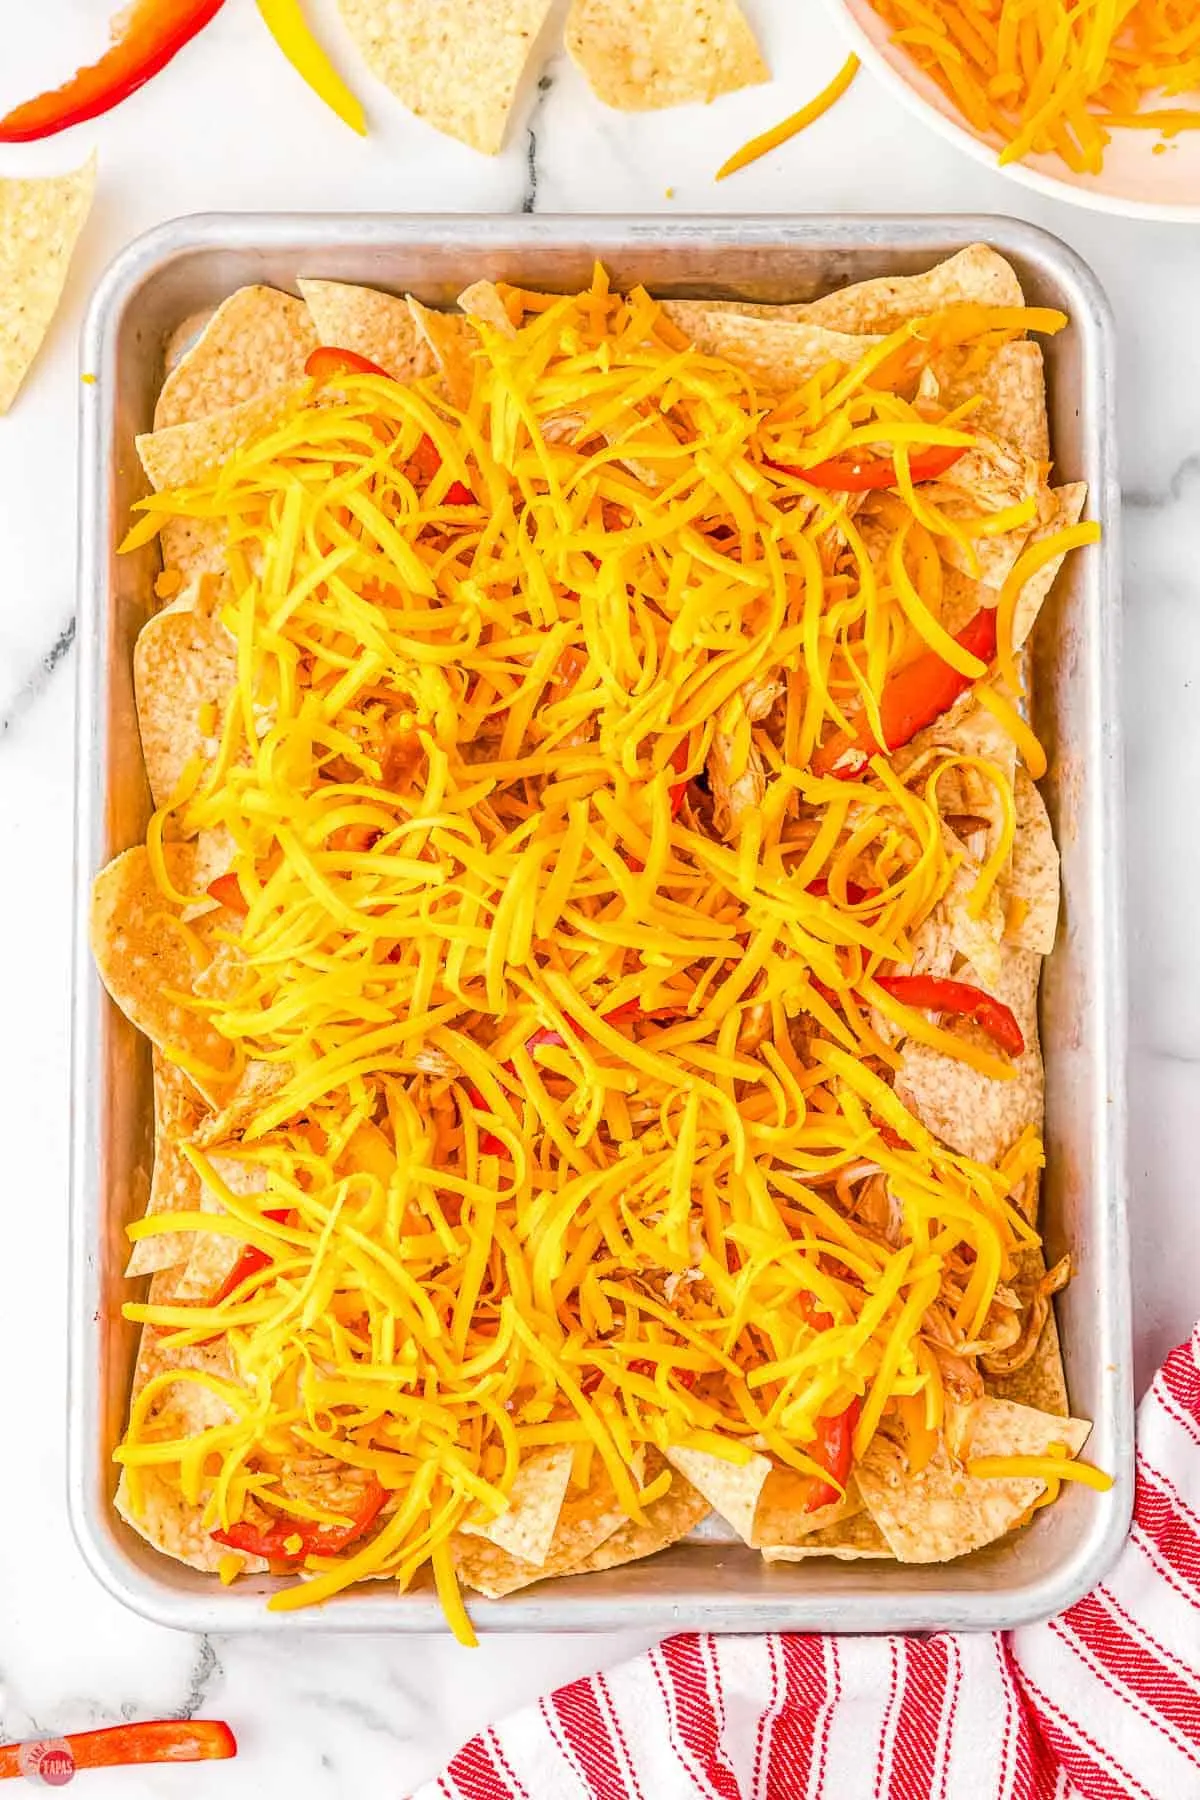 shredded cheddar cheese on nacho chips